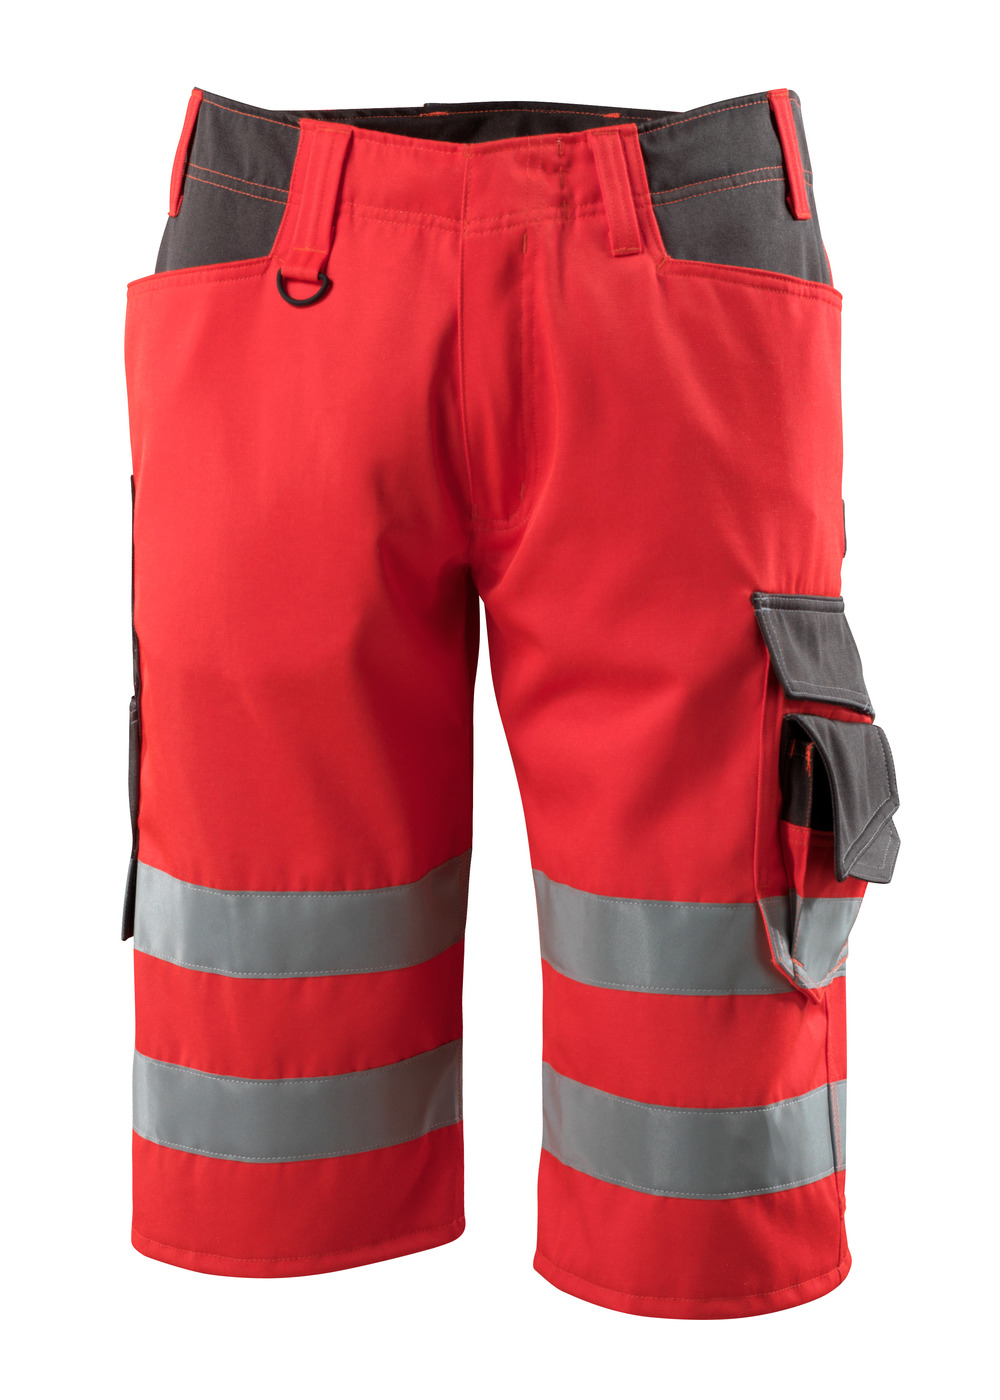 MASCOT-Warnschutz, Warn-Shorts, Luton,  290 g/m², rot/dunkelanthrazit

